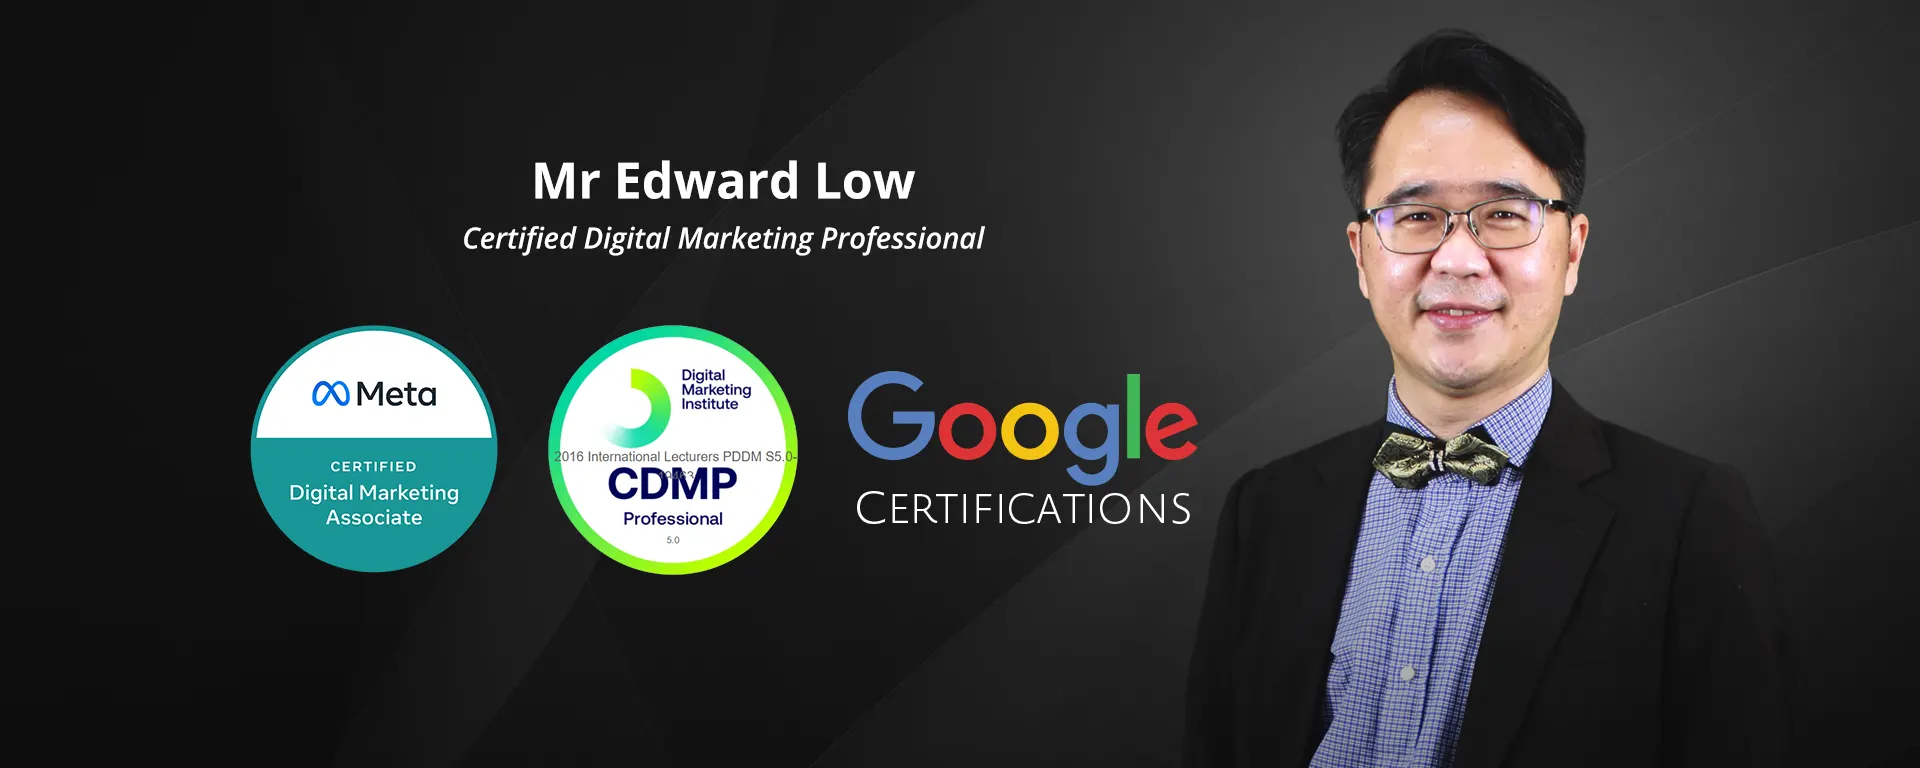 Edward Low - Certified Digital Marketing Professional